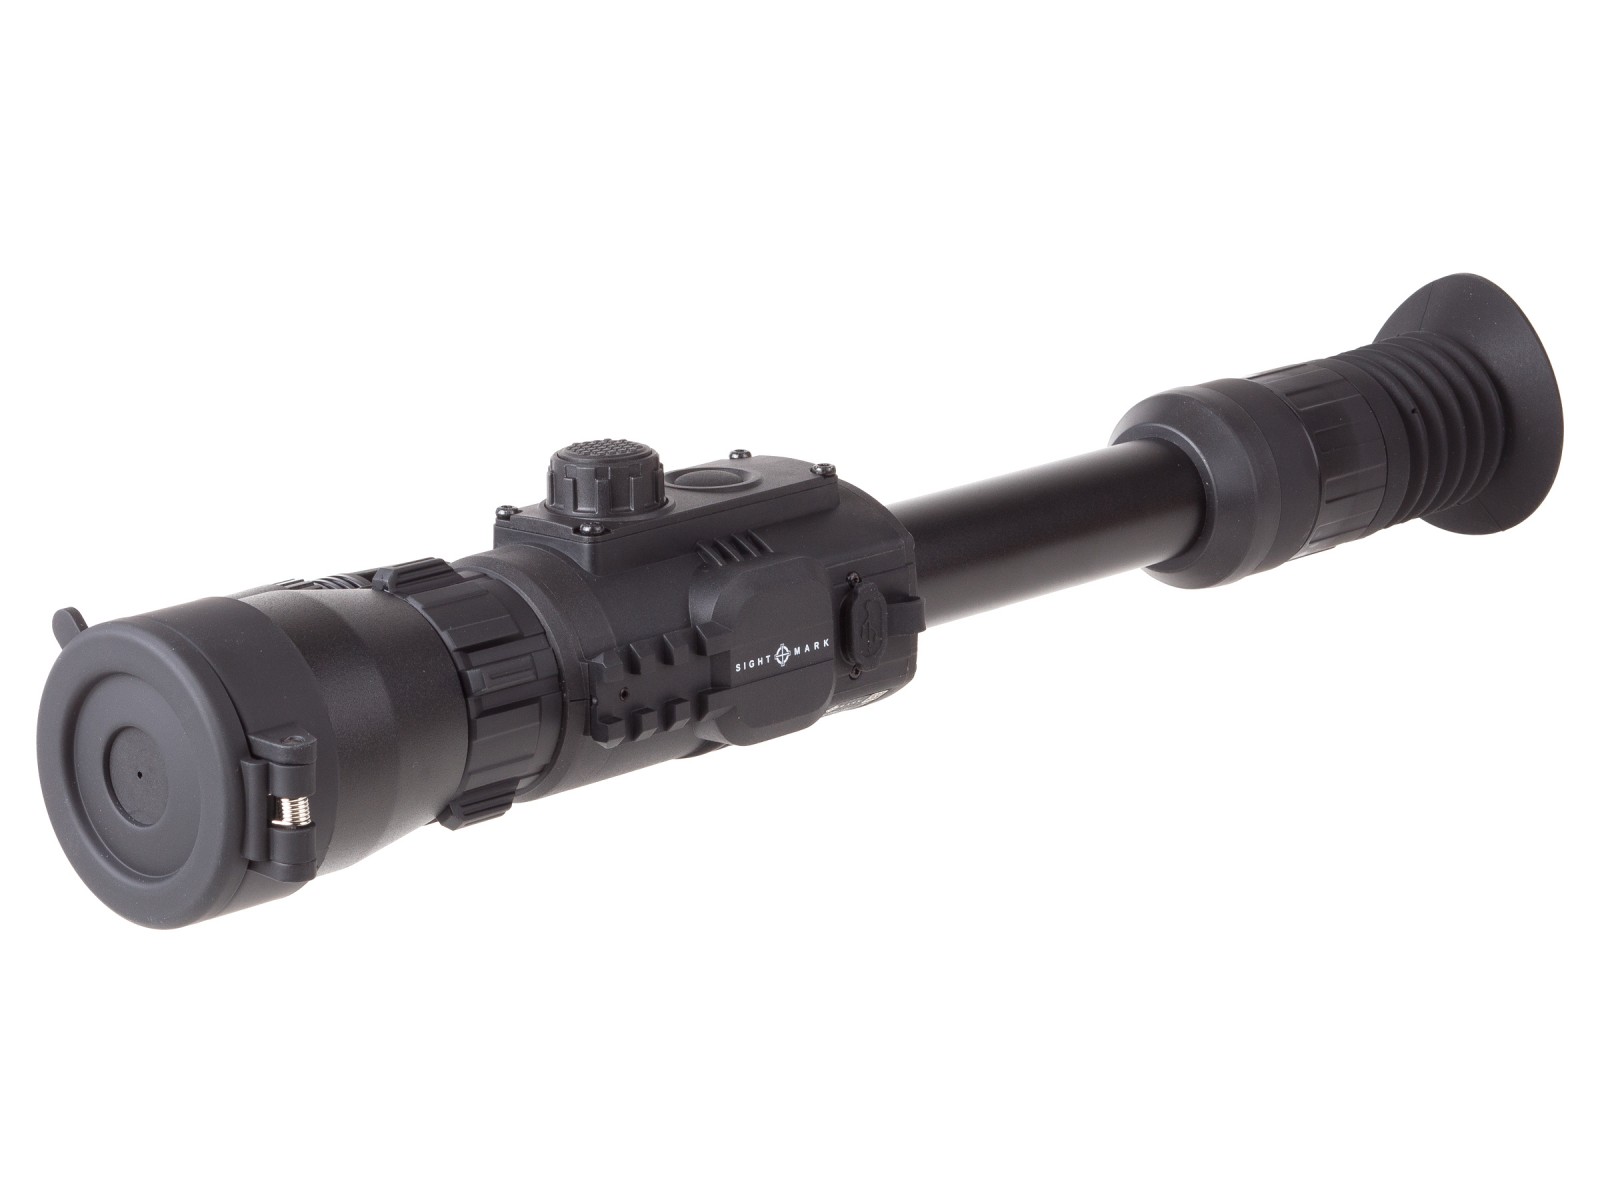 Photon RT 6.5x50 Digital Night Vision Riflescope, 30mm Tube